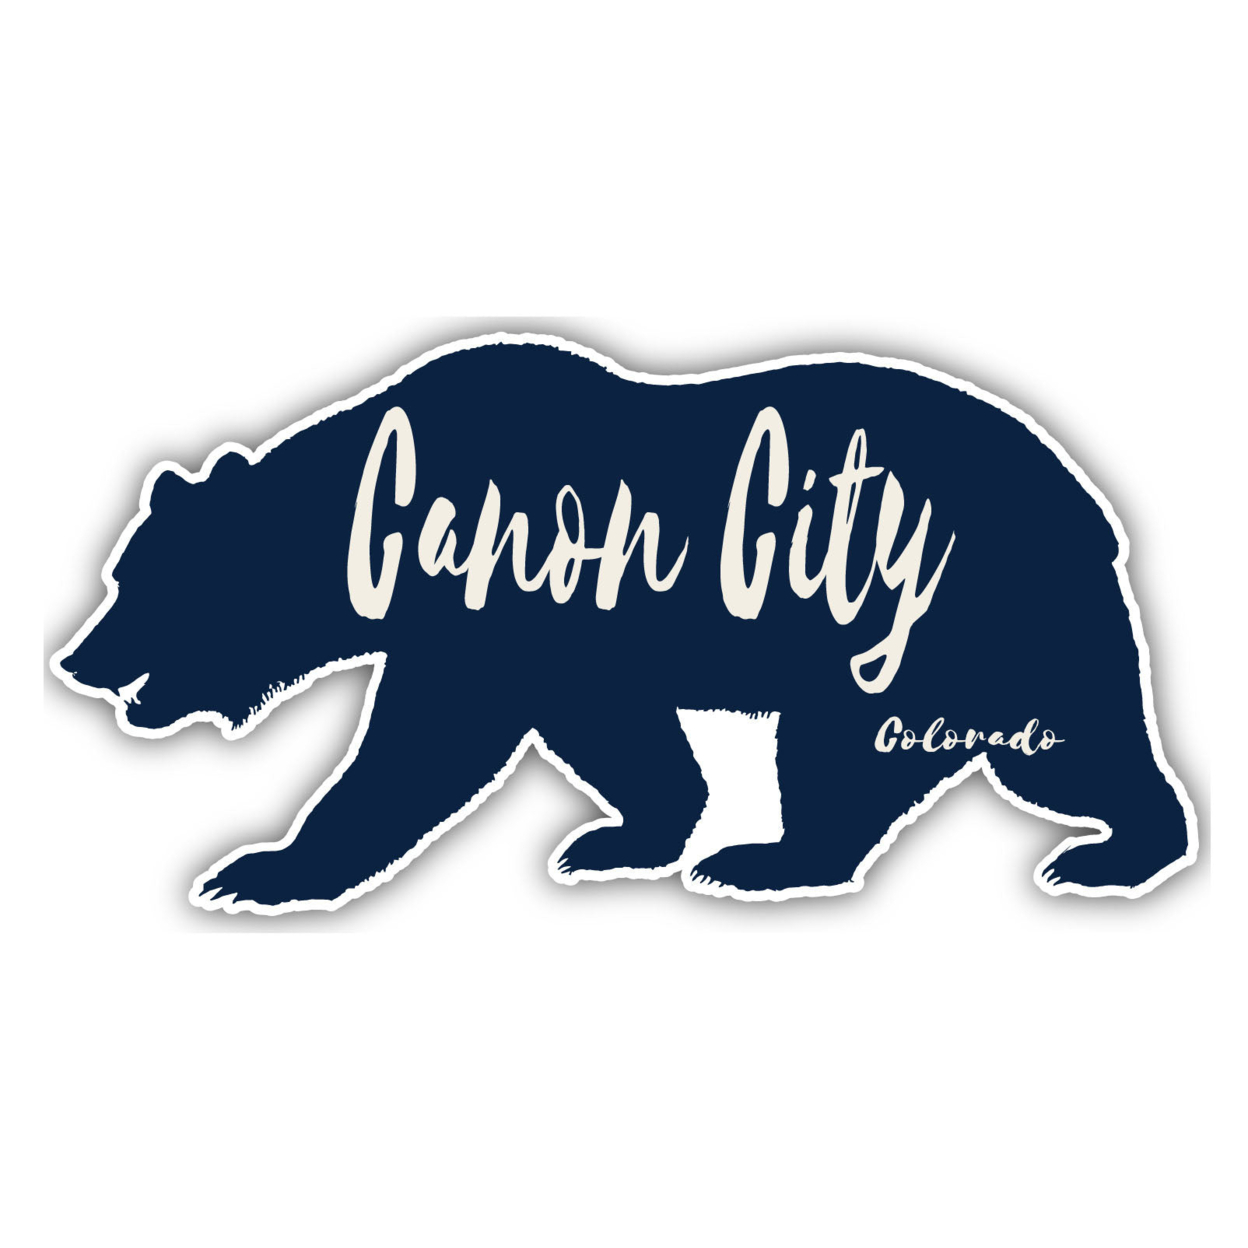 Canon City Colorado Souvenir Decorative Stickers (Choose Theme And Size) - 4-Pack, 2-Inch, Tent